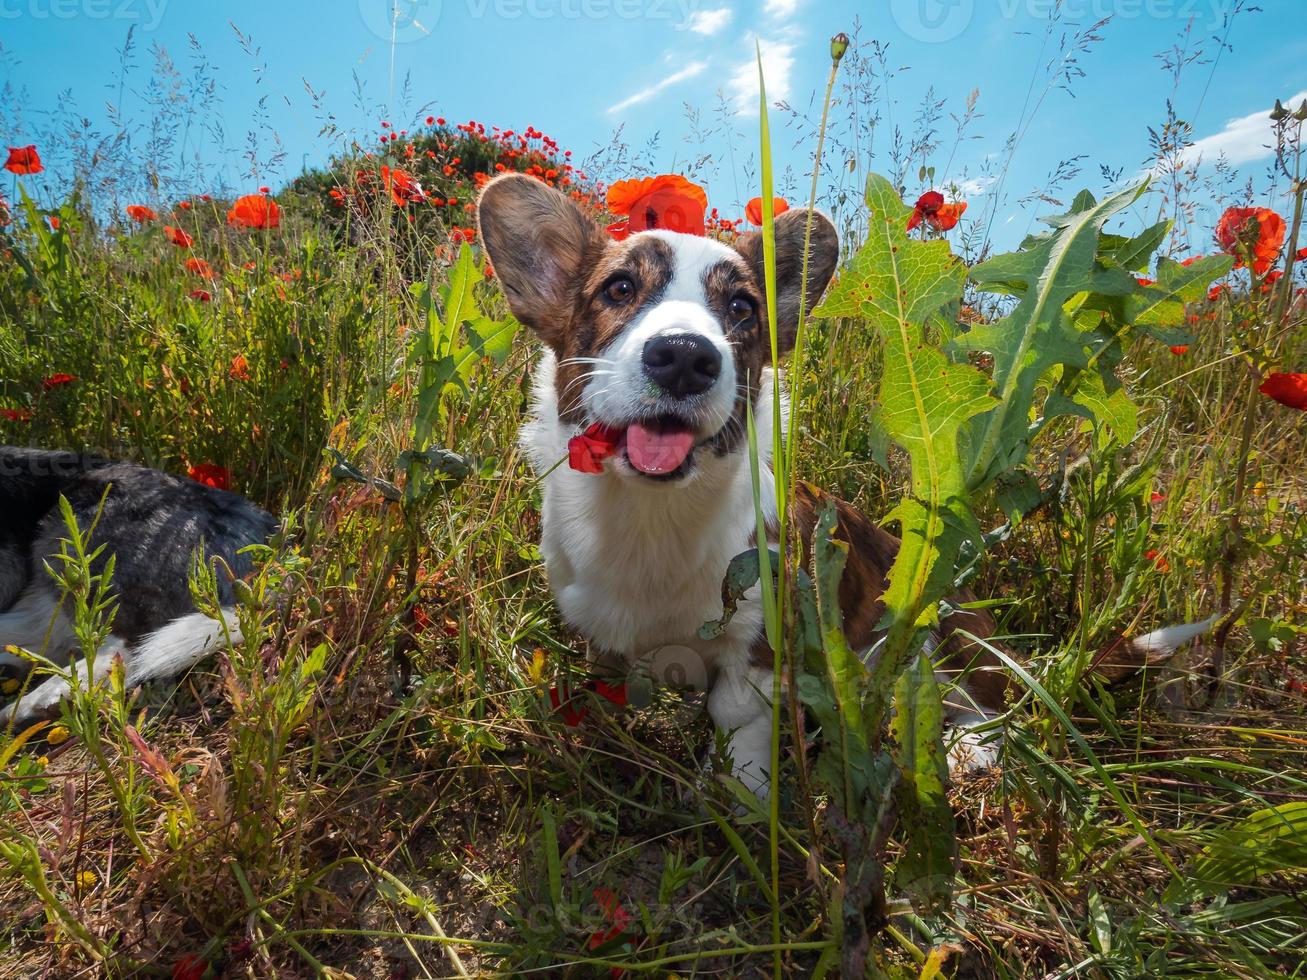 giovane welsh corgi cardigan cane nel campo di papaveri freschi. foto